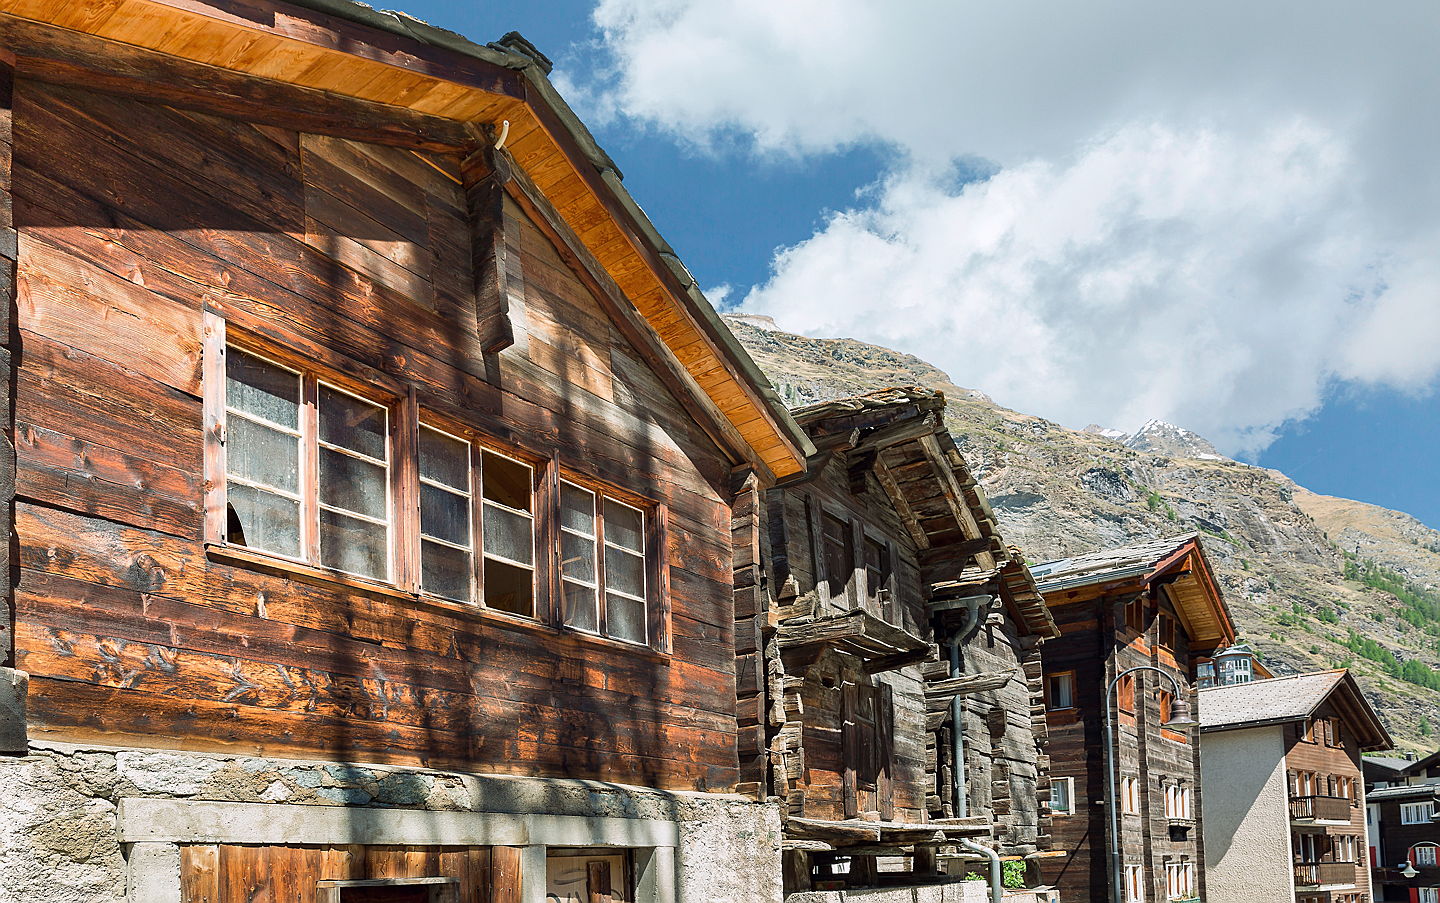  Solothurn
- Chalet in Zermatt